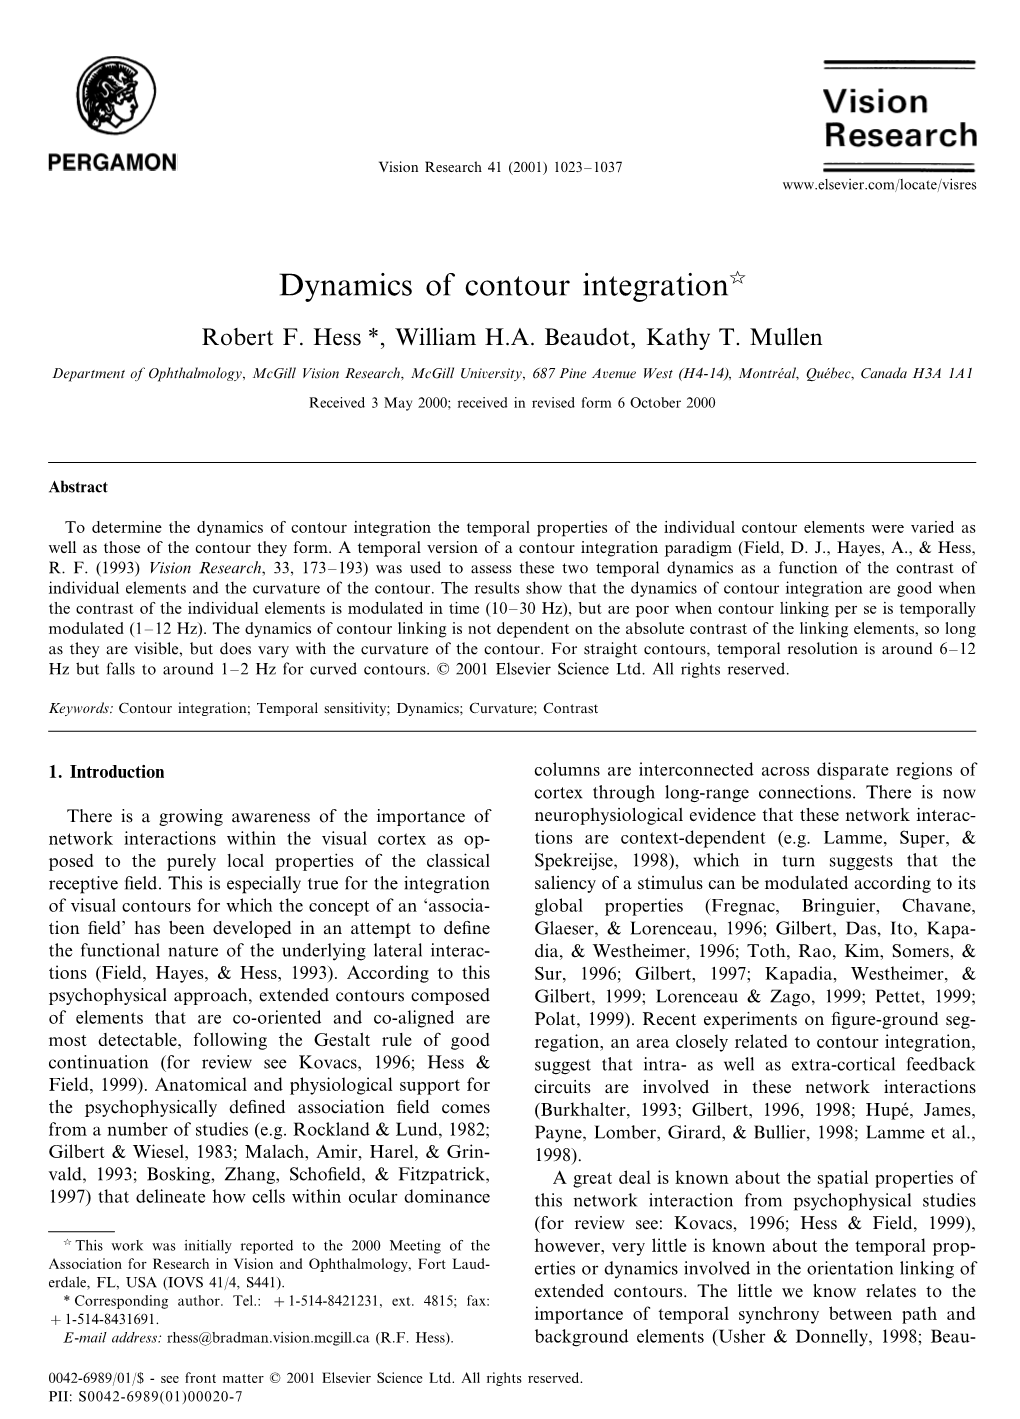 Dynamics of Contour Integration